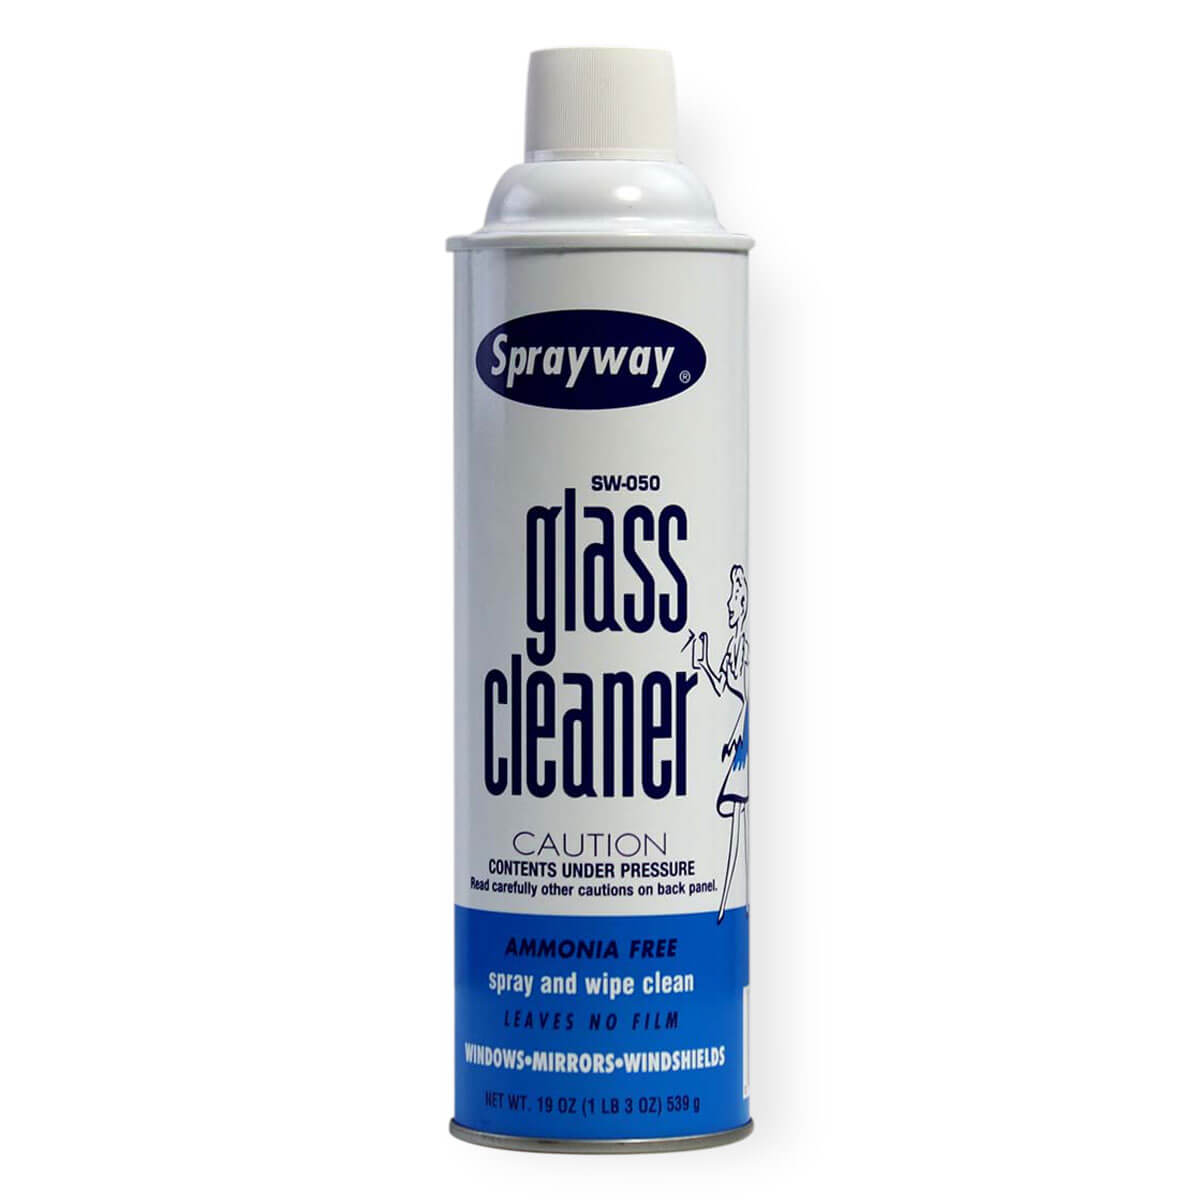 Sprayway Glass Cleaner: Clean exposure glass